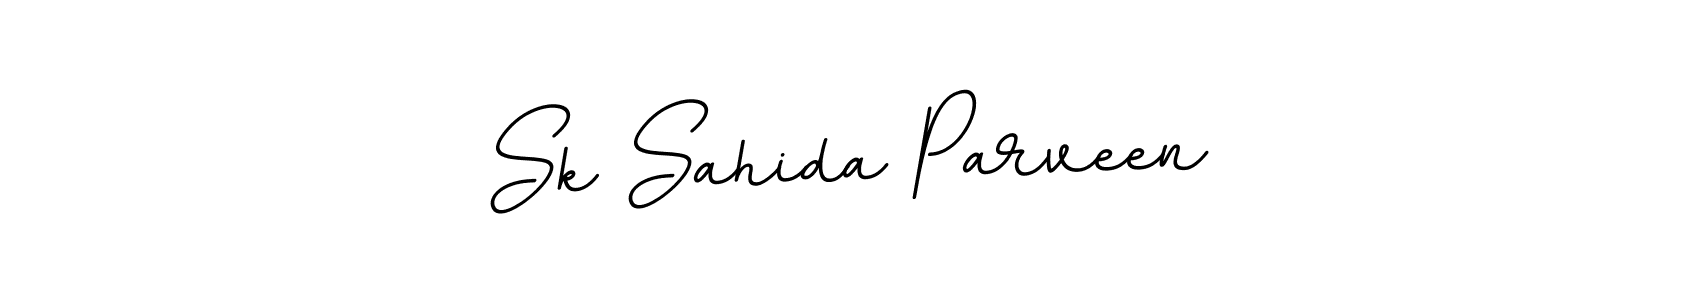 How to Draw Sk Sahida Parveen signature style? BallpointsItalic-DORy9 is a latest design signature styles for name Sk Sahida Parveen. Sk Sahida Parveen signature style 11 images and pictures png